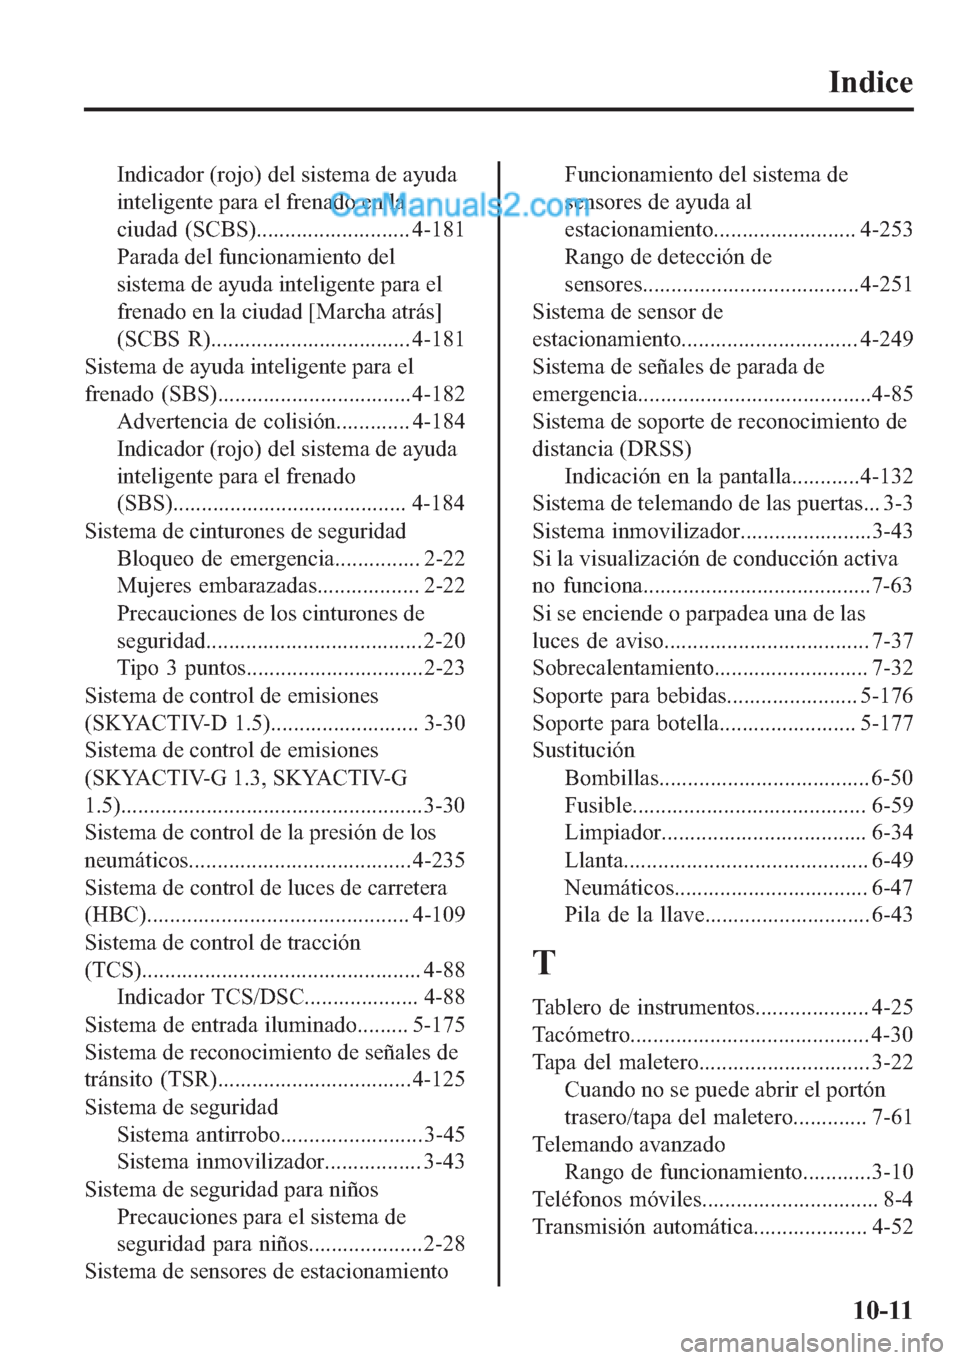 MAZDA MODEL 2 2019  Manual del propietario (in Spanish) �,�Q�G�L�F�H
�,�Q�G�L�F�D�G�R�U���U�R�M�R���G�H�O��V�L�V�W�H�P�D��G�H��D�\�X�G�D
�L�Q�W�H�O�L�J�H�Q�W�H��S�D�U�D��H�O��I�U�H�Q�D�G�R��H�Q��O�D
�F�L�X�G�D�G� ��6�&�%�6����������